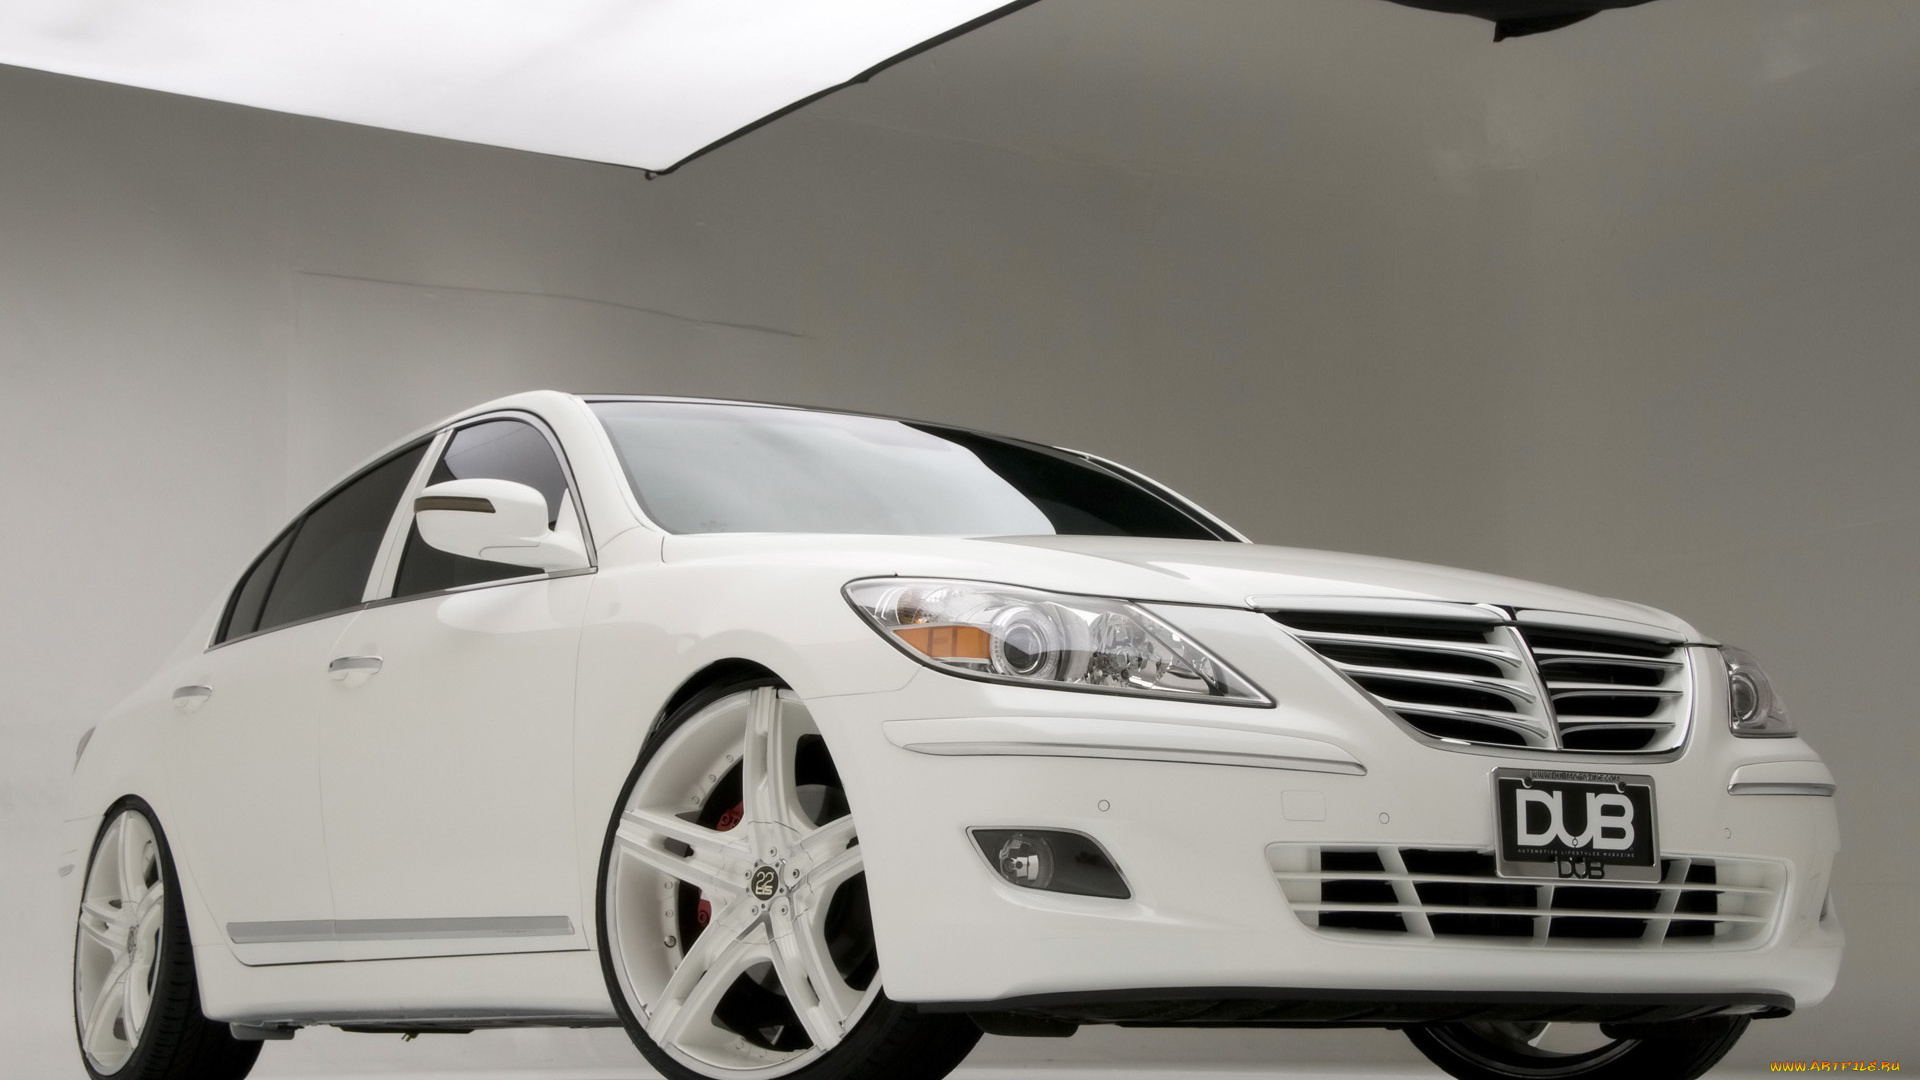 2009, hyundai, dub, magazine, genesis, sedan, white, автомобили